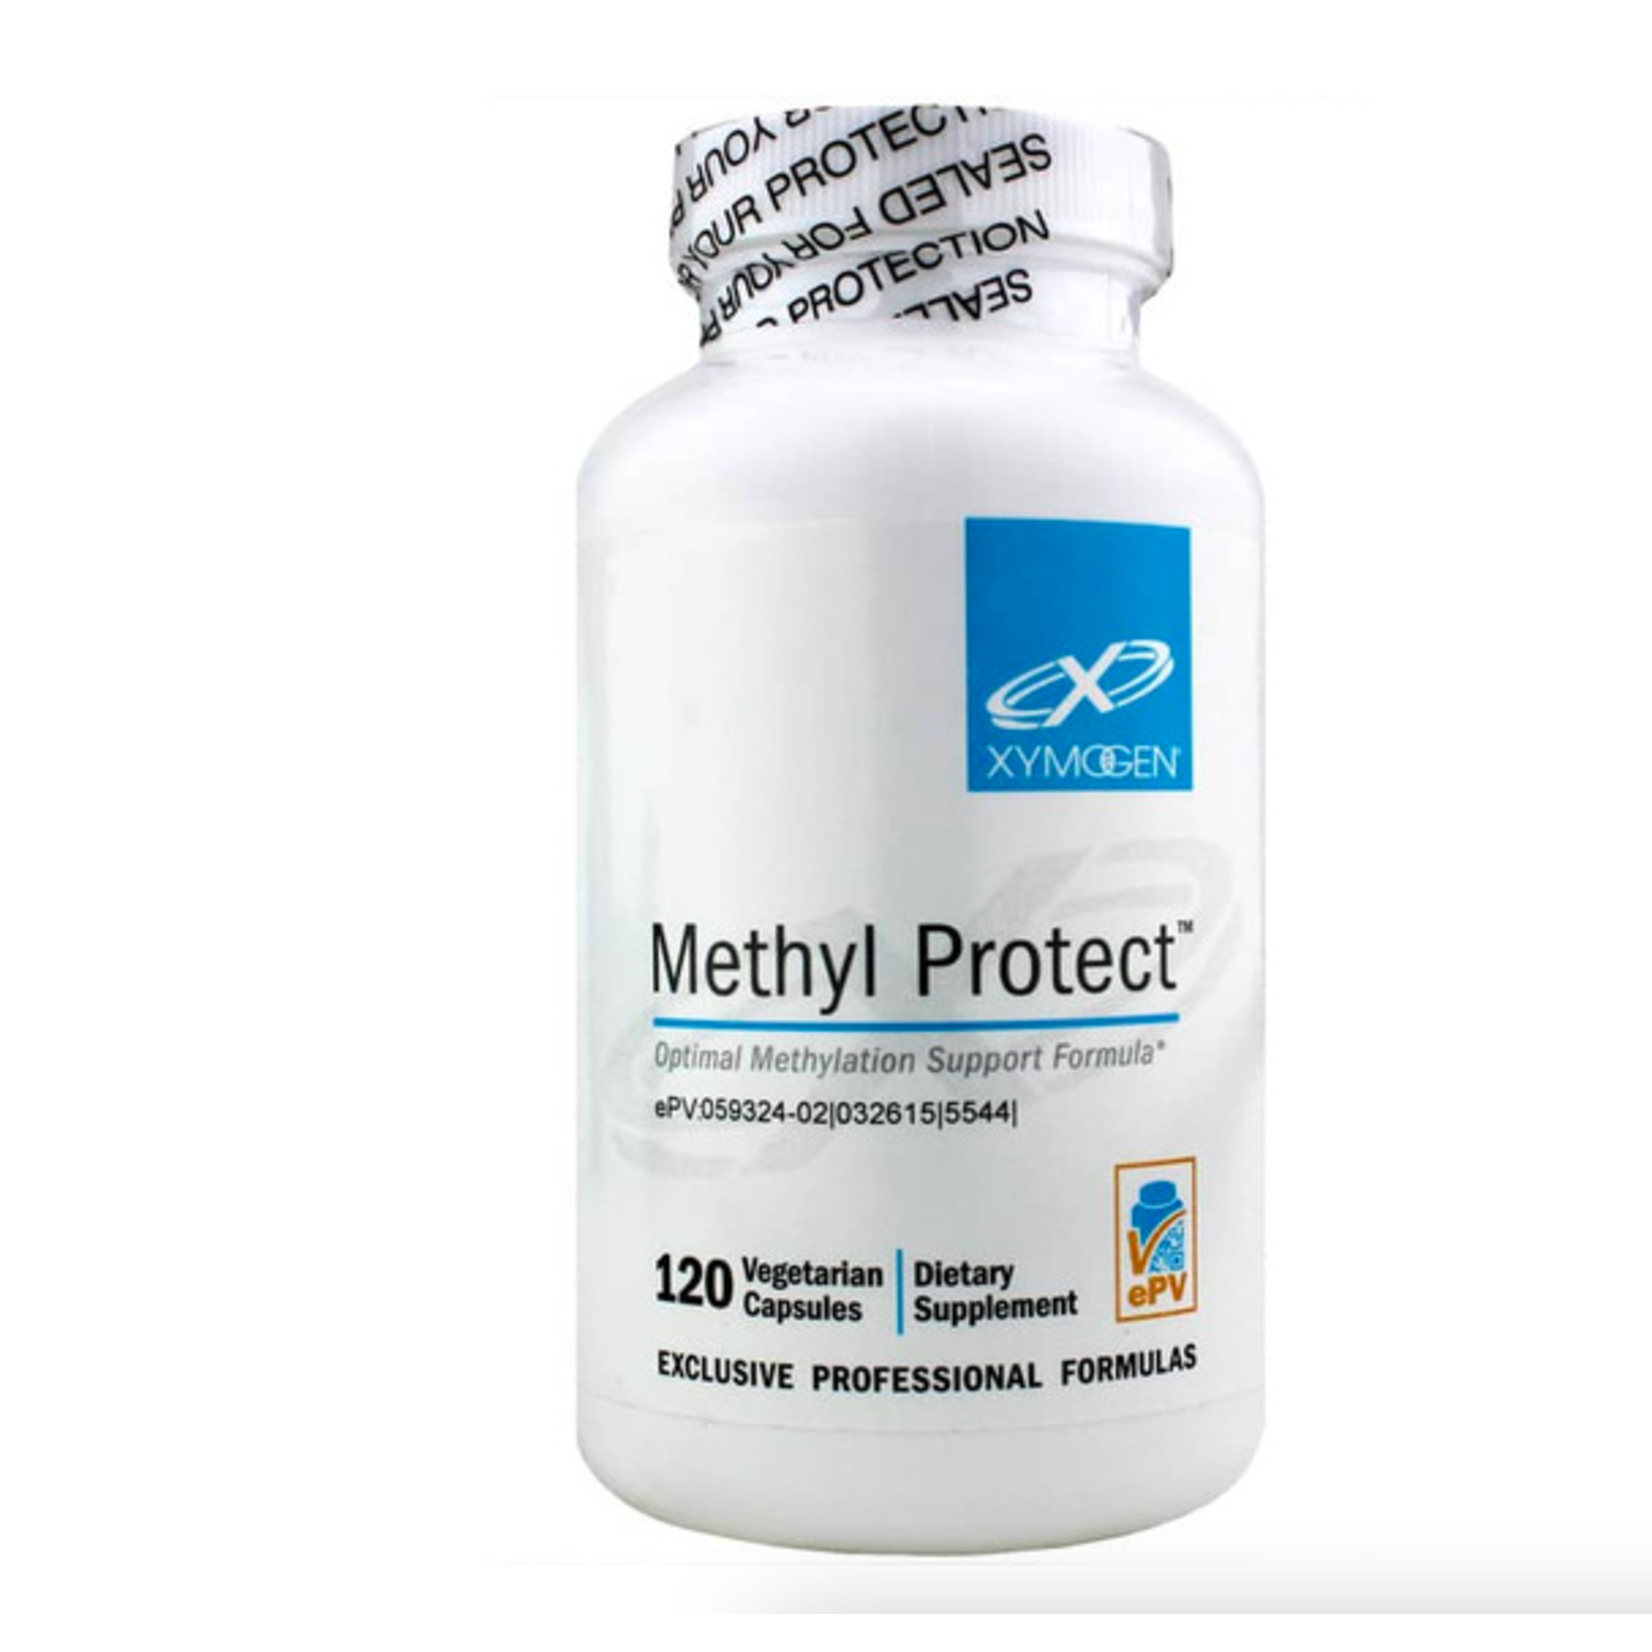 Methyl Protect (Xymogen)